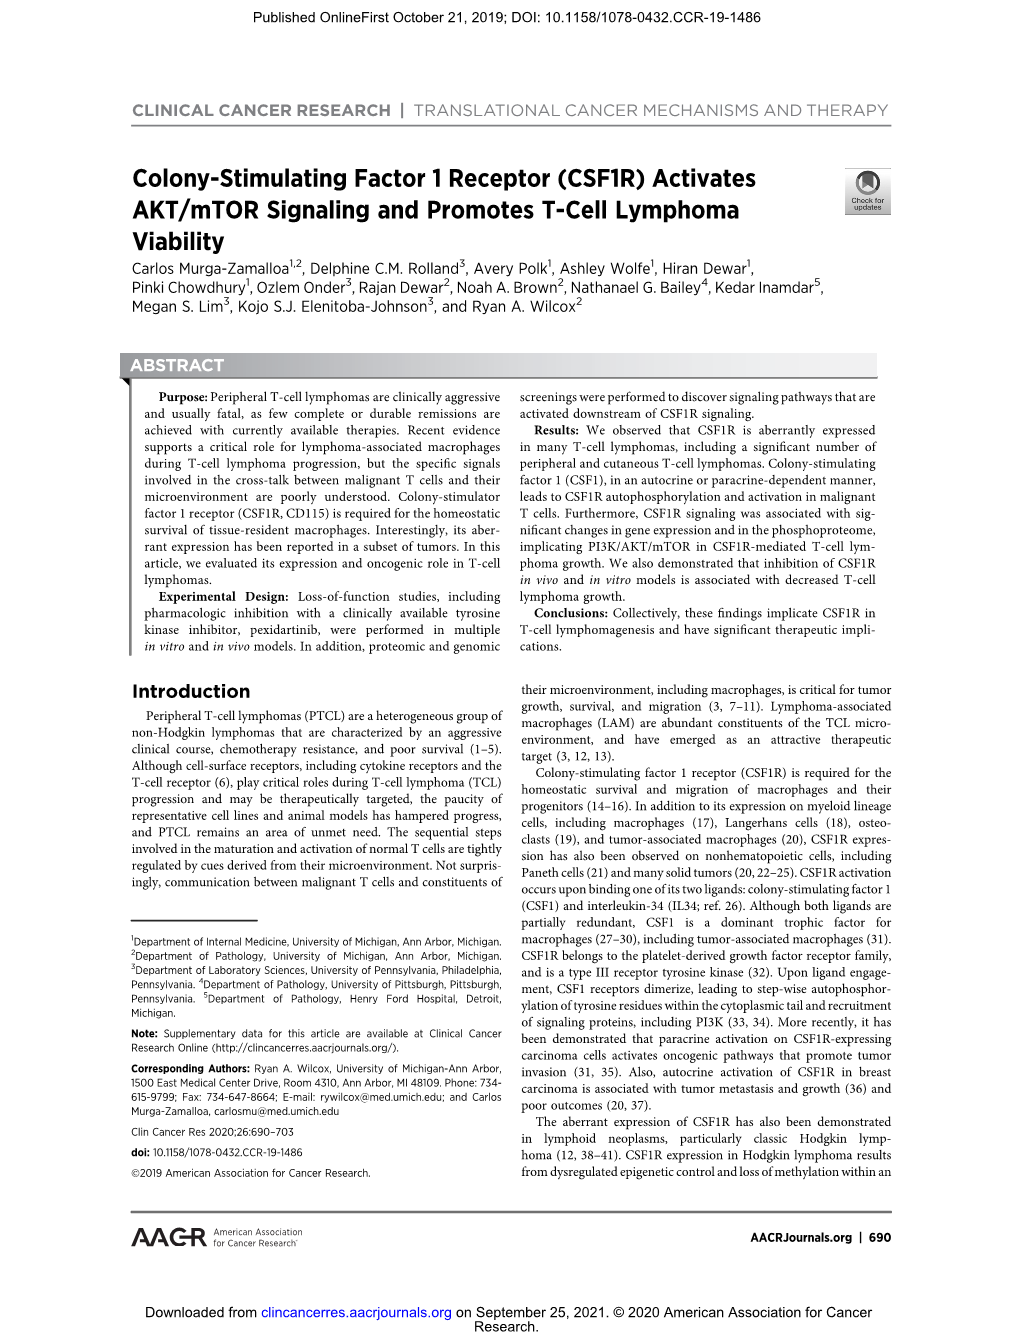 Colony-Stimulating Factor 1 Receptor (CSF1R) Activates AKT/Mtor Signaling and Promotes T-Cell Lymphoma Viability Carlos Murga-Zamalloa1,2, Delphine C.M